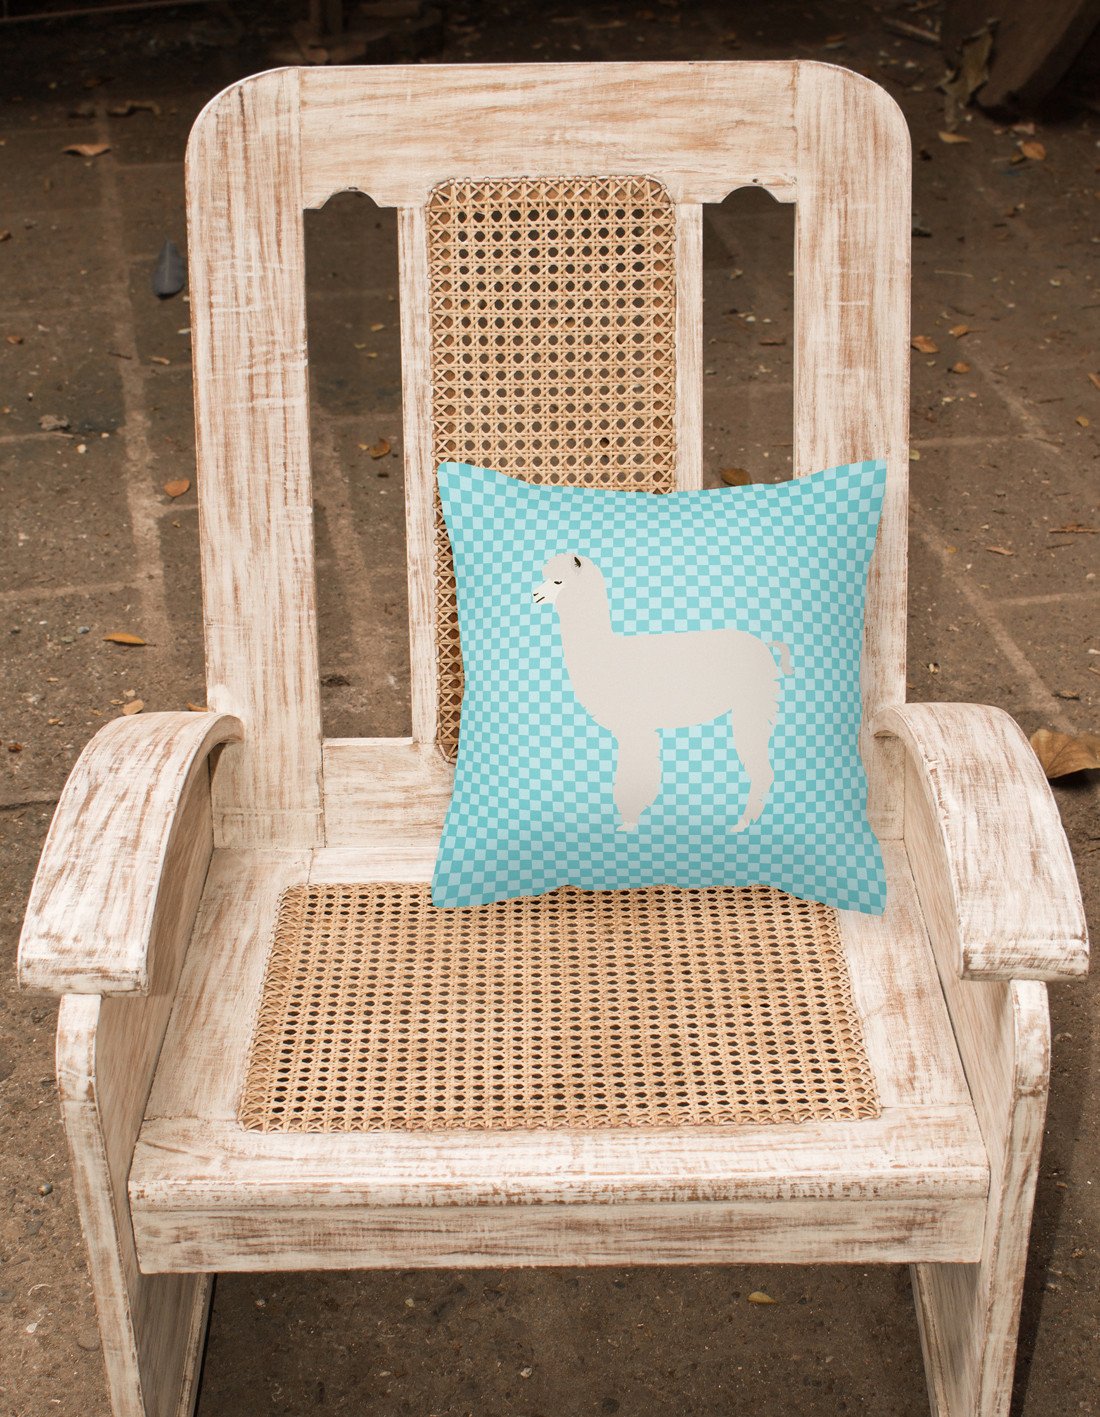 Alpaca Blue Check Fabric Decorative Pillow BB8093PW1818 by Caroline's Treasures